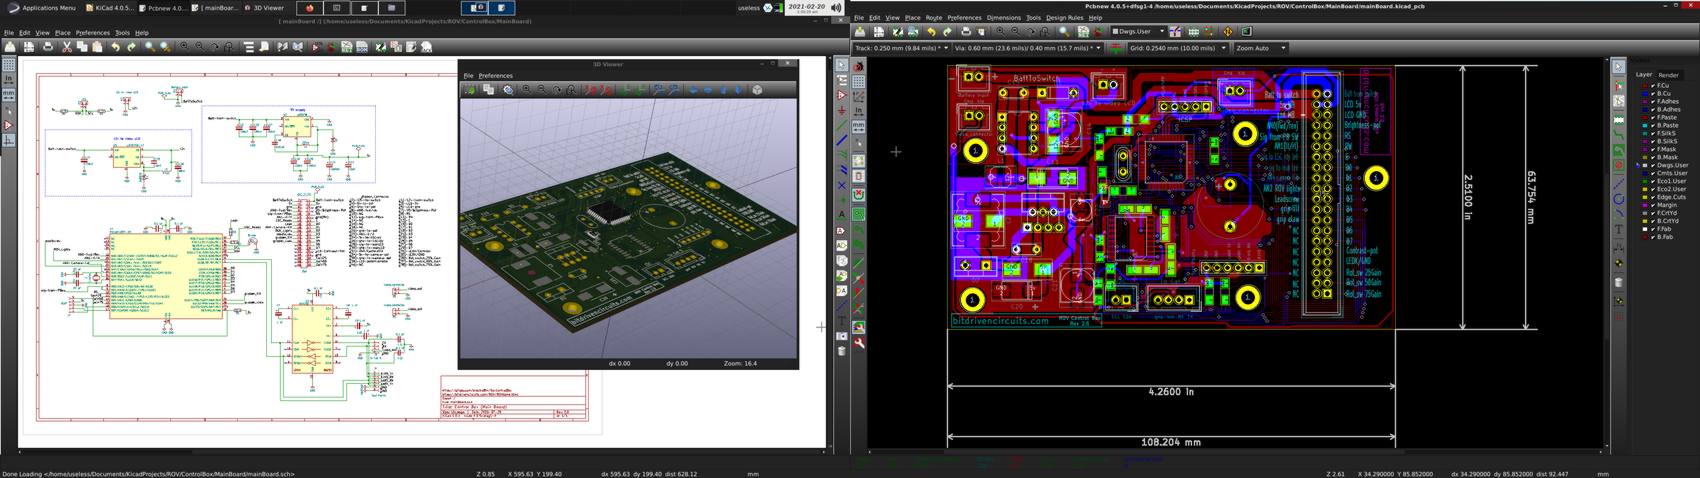 Kicad PCB layout for ROV